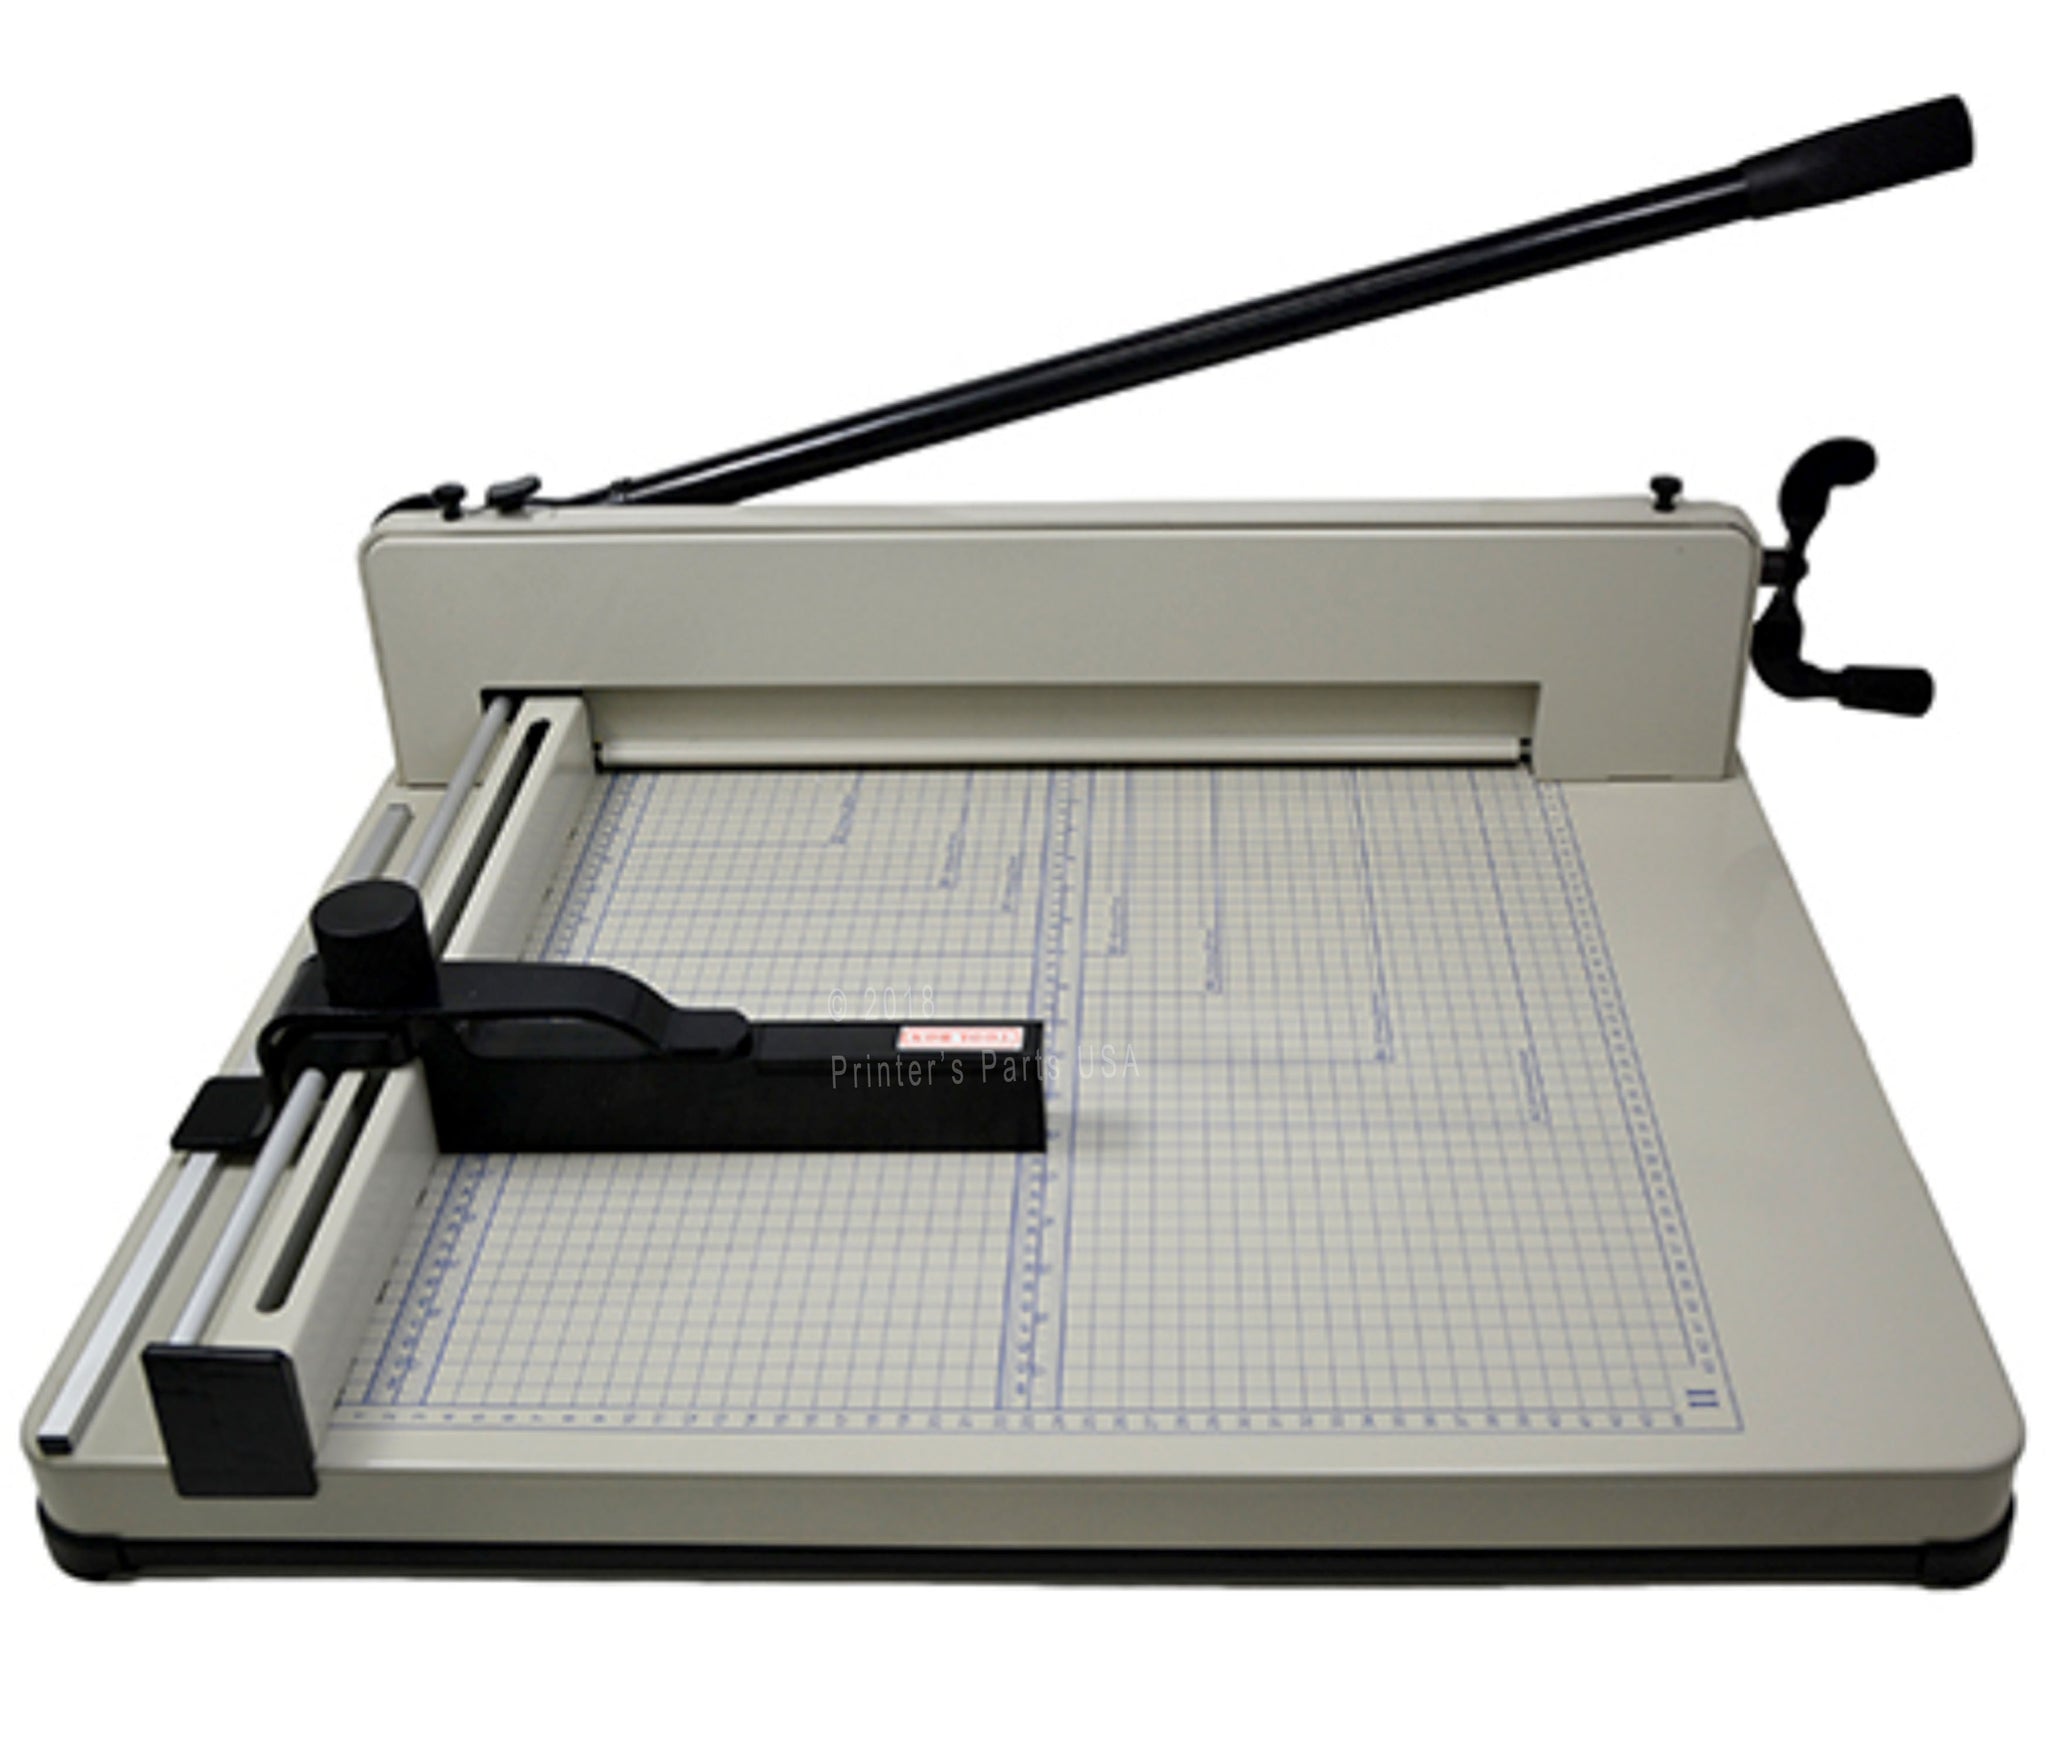 Buy Standard PC-450 Semi-Automatic Electric Paper Cutter Online